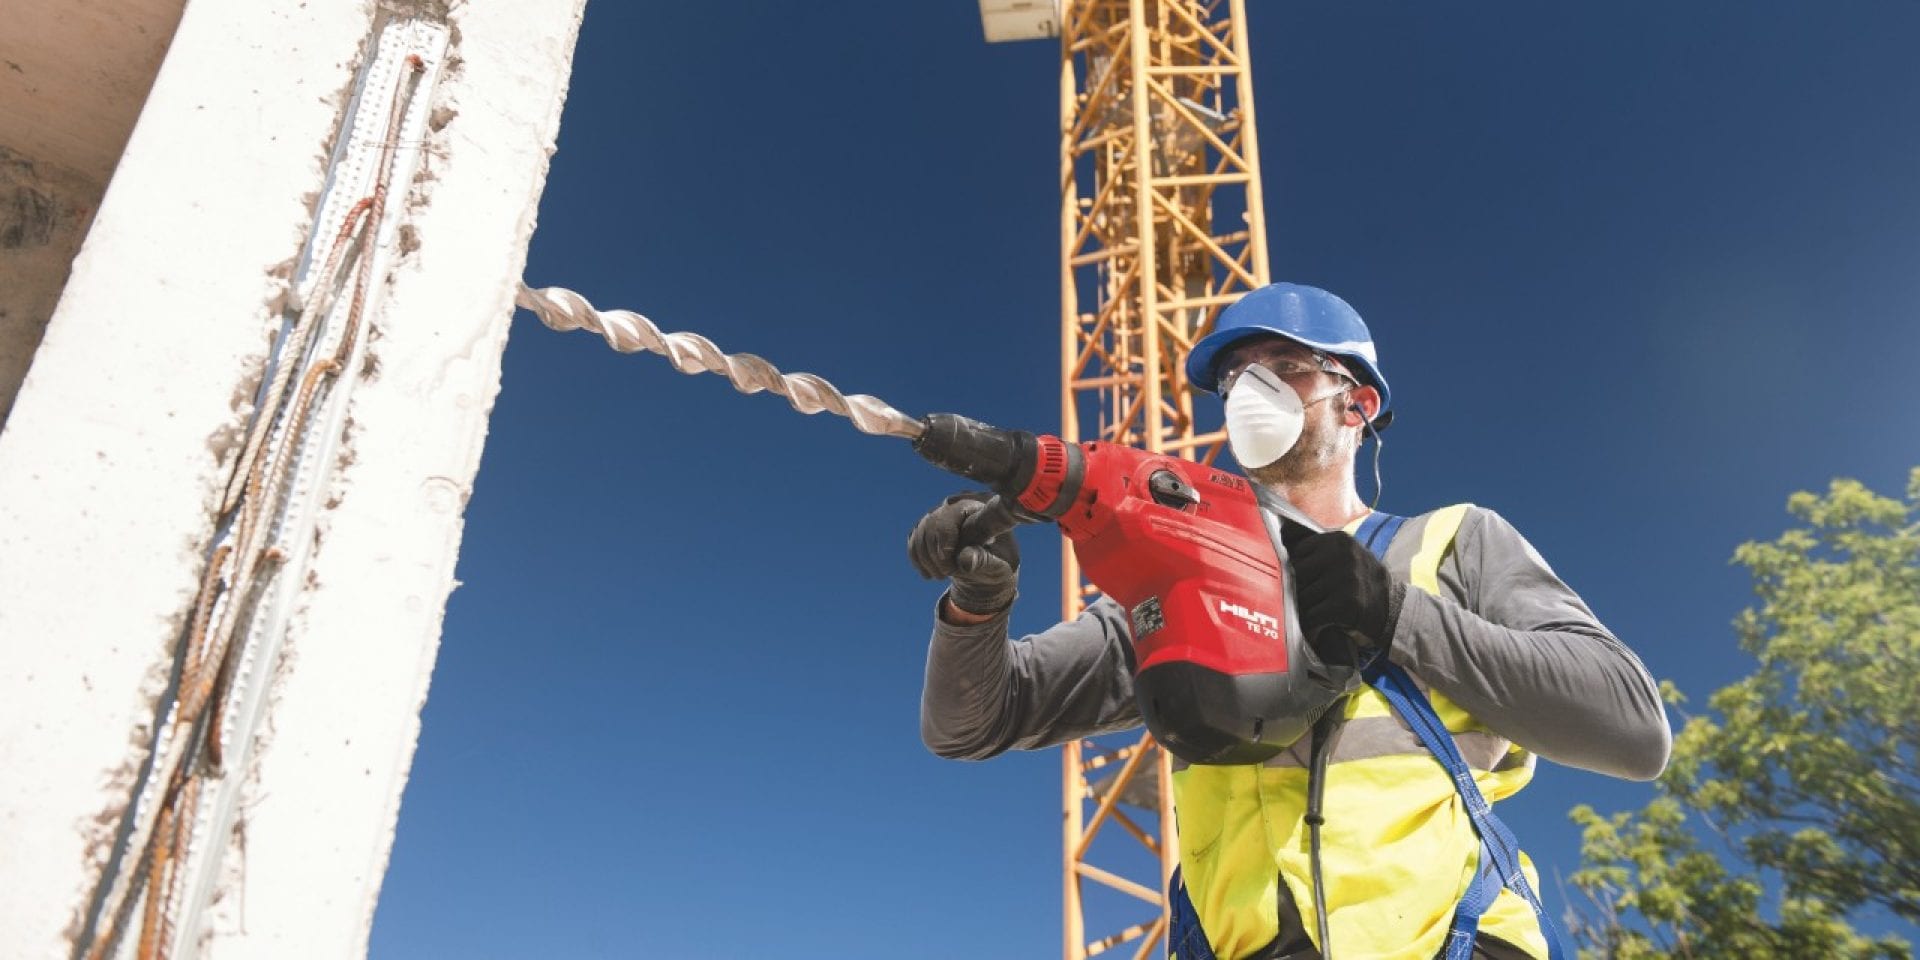 Hilti drilling and demolition training